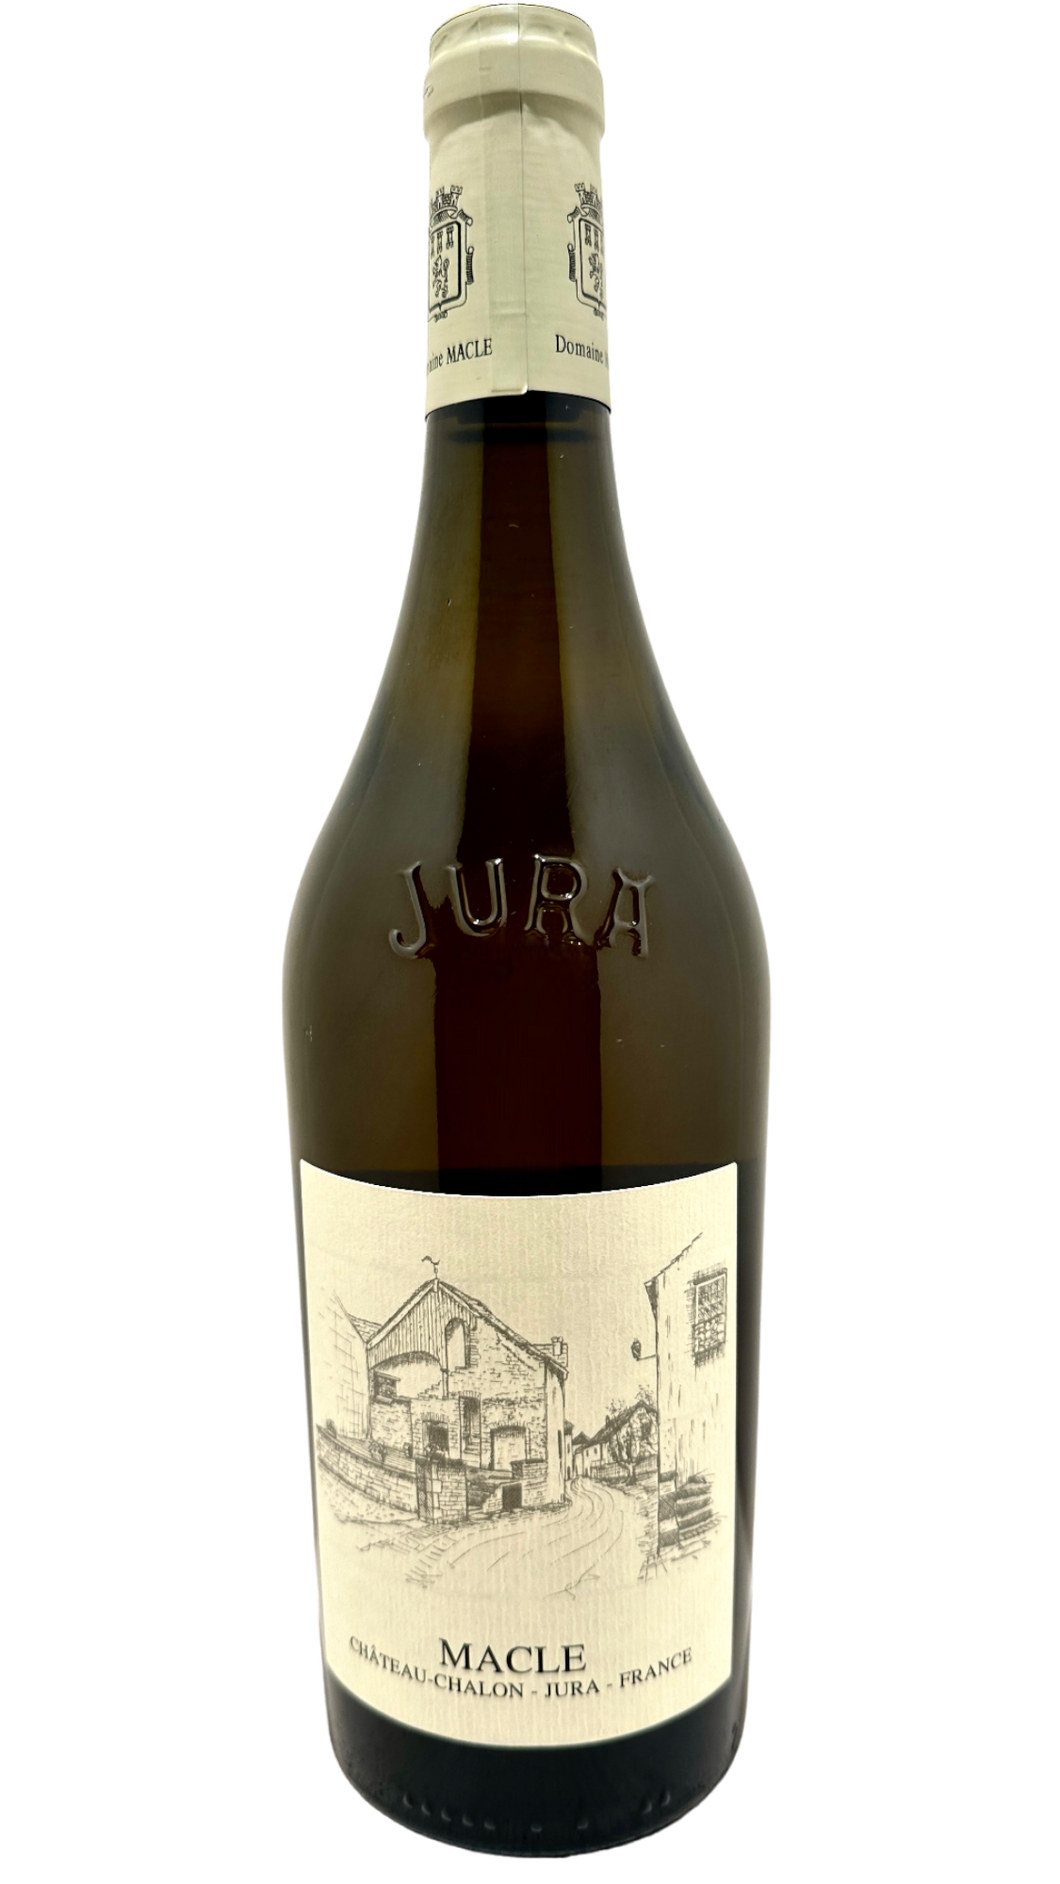 Côtes du jura chardonnay Domaine Macle